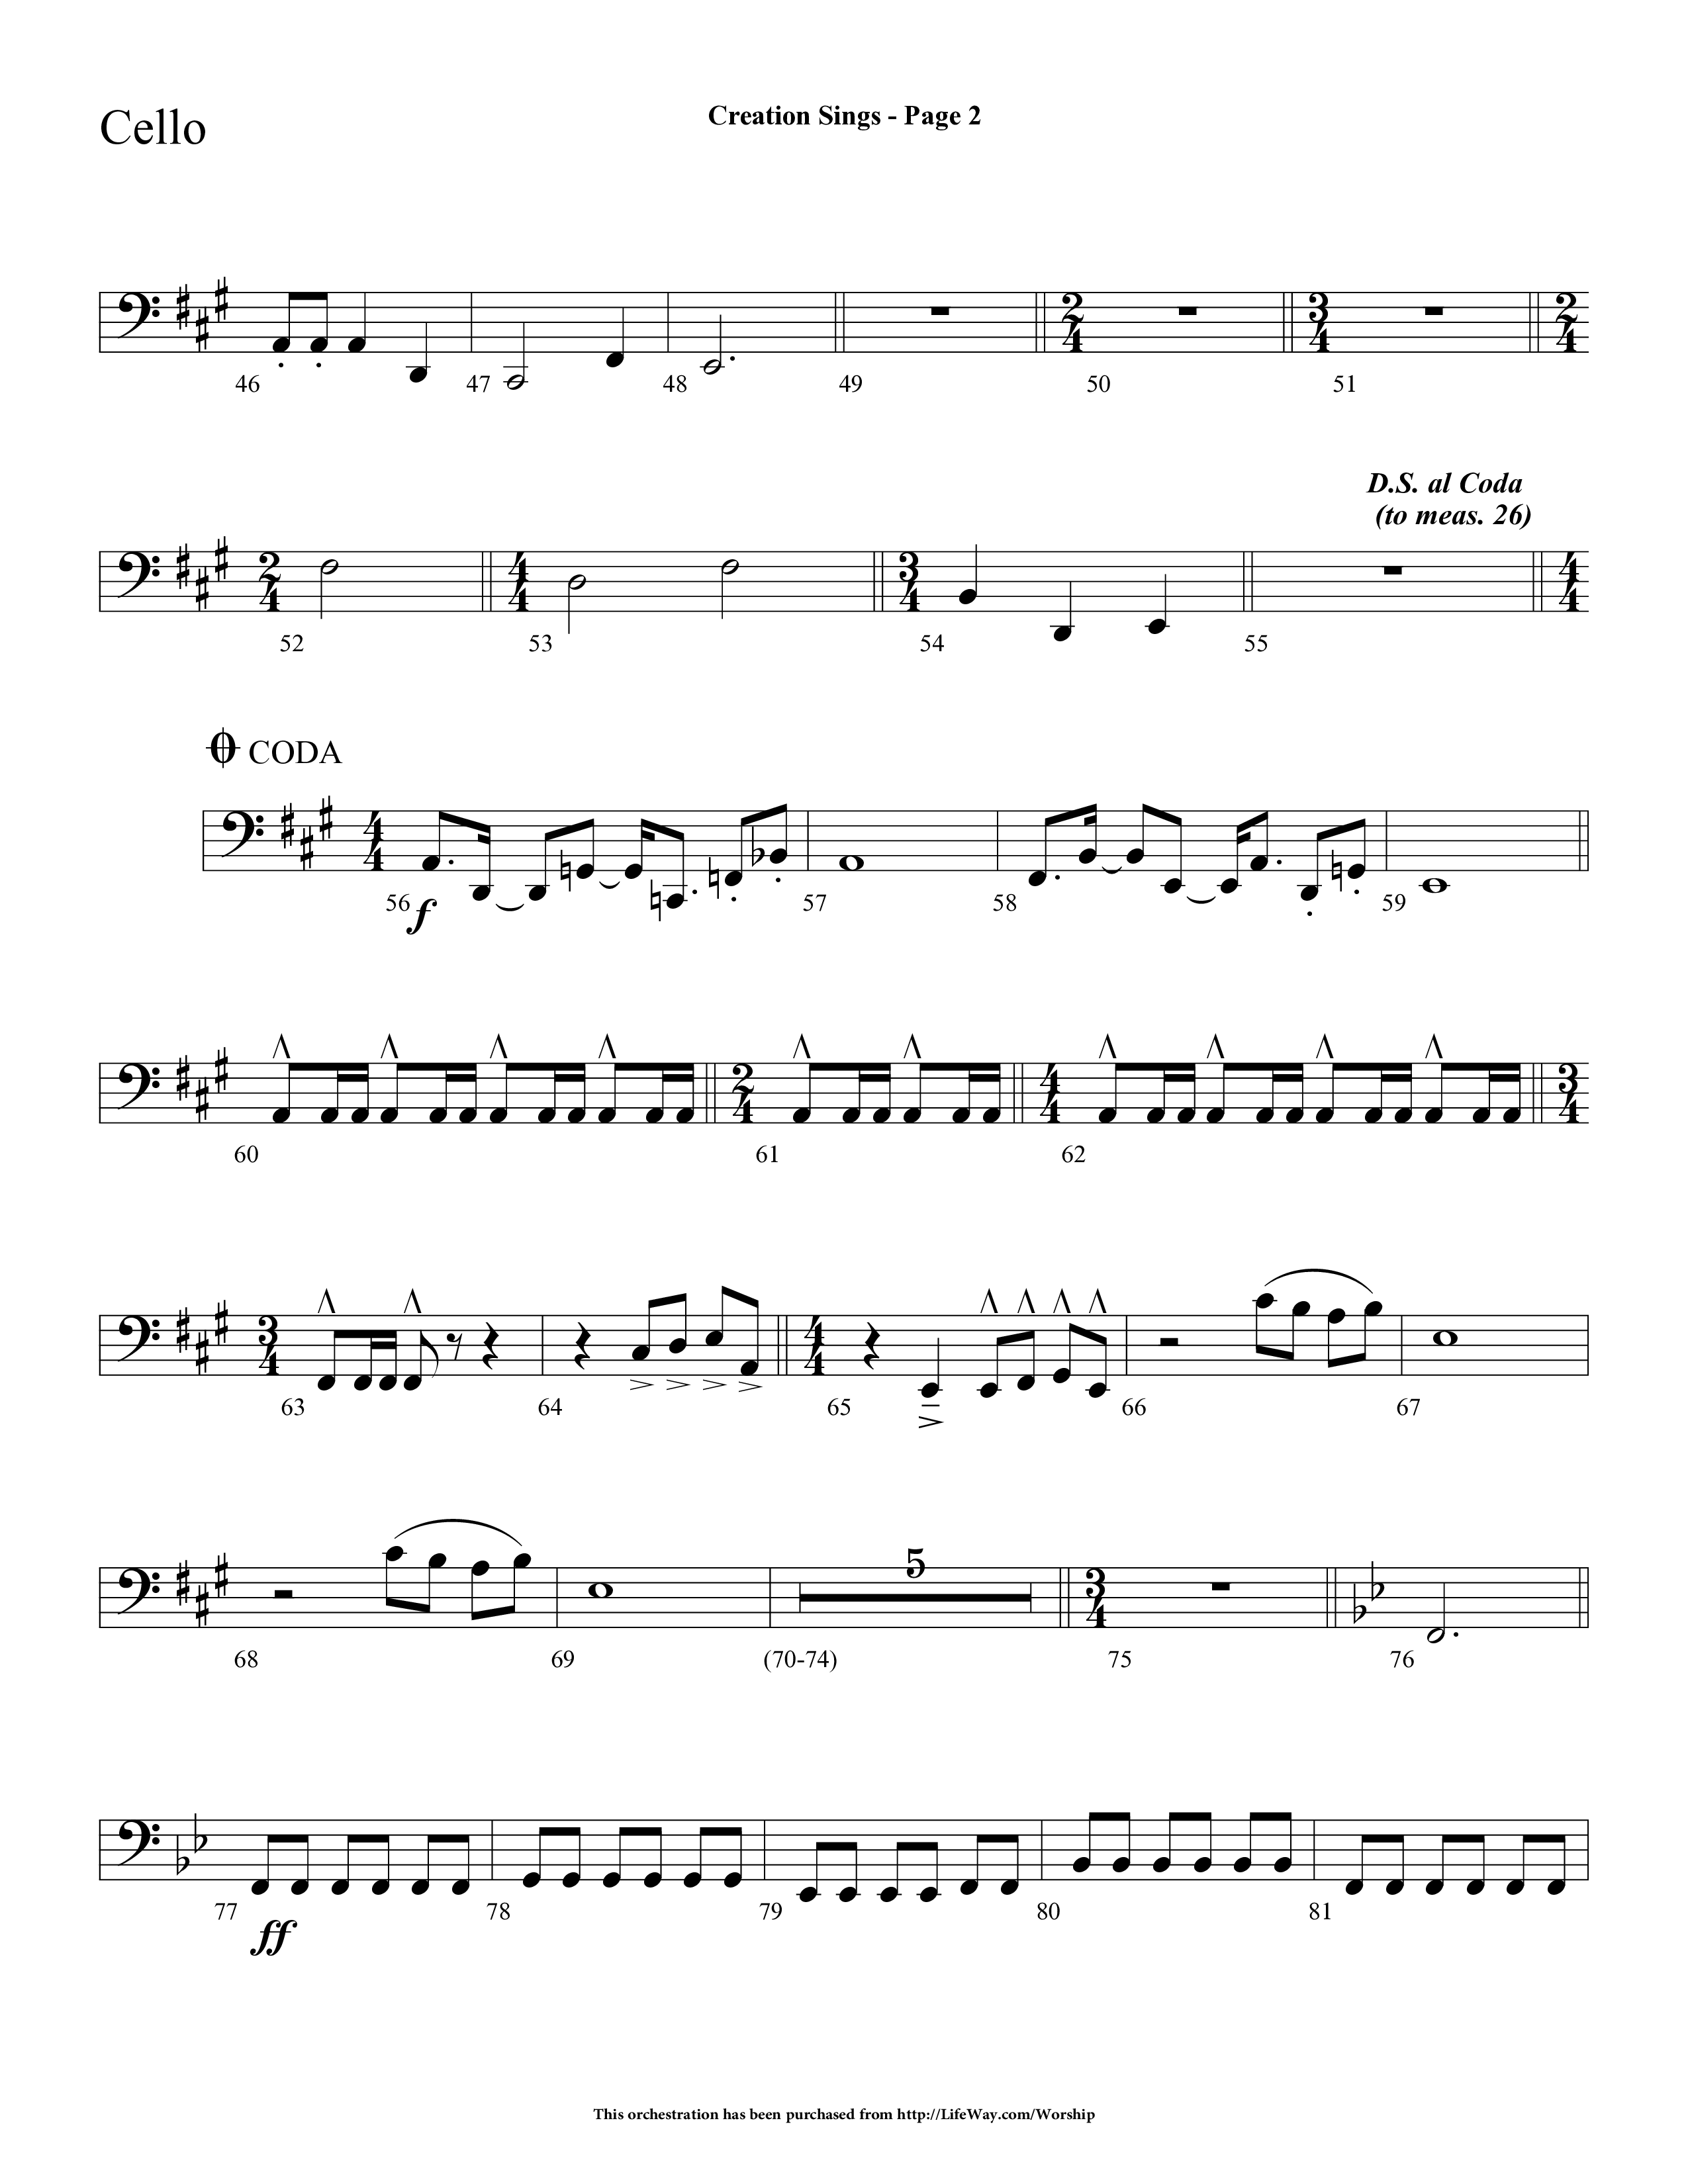 Creation Sings (Choral Anthem SATB) Cello (Lifeway Choral / Arr. Dave Williamson)